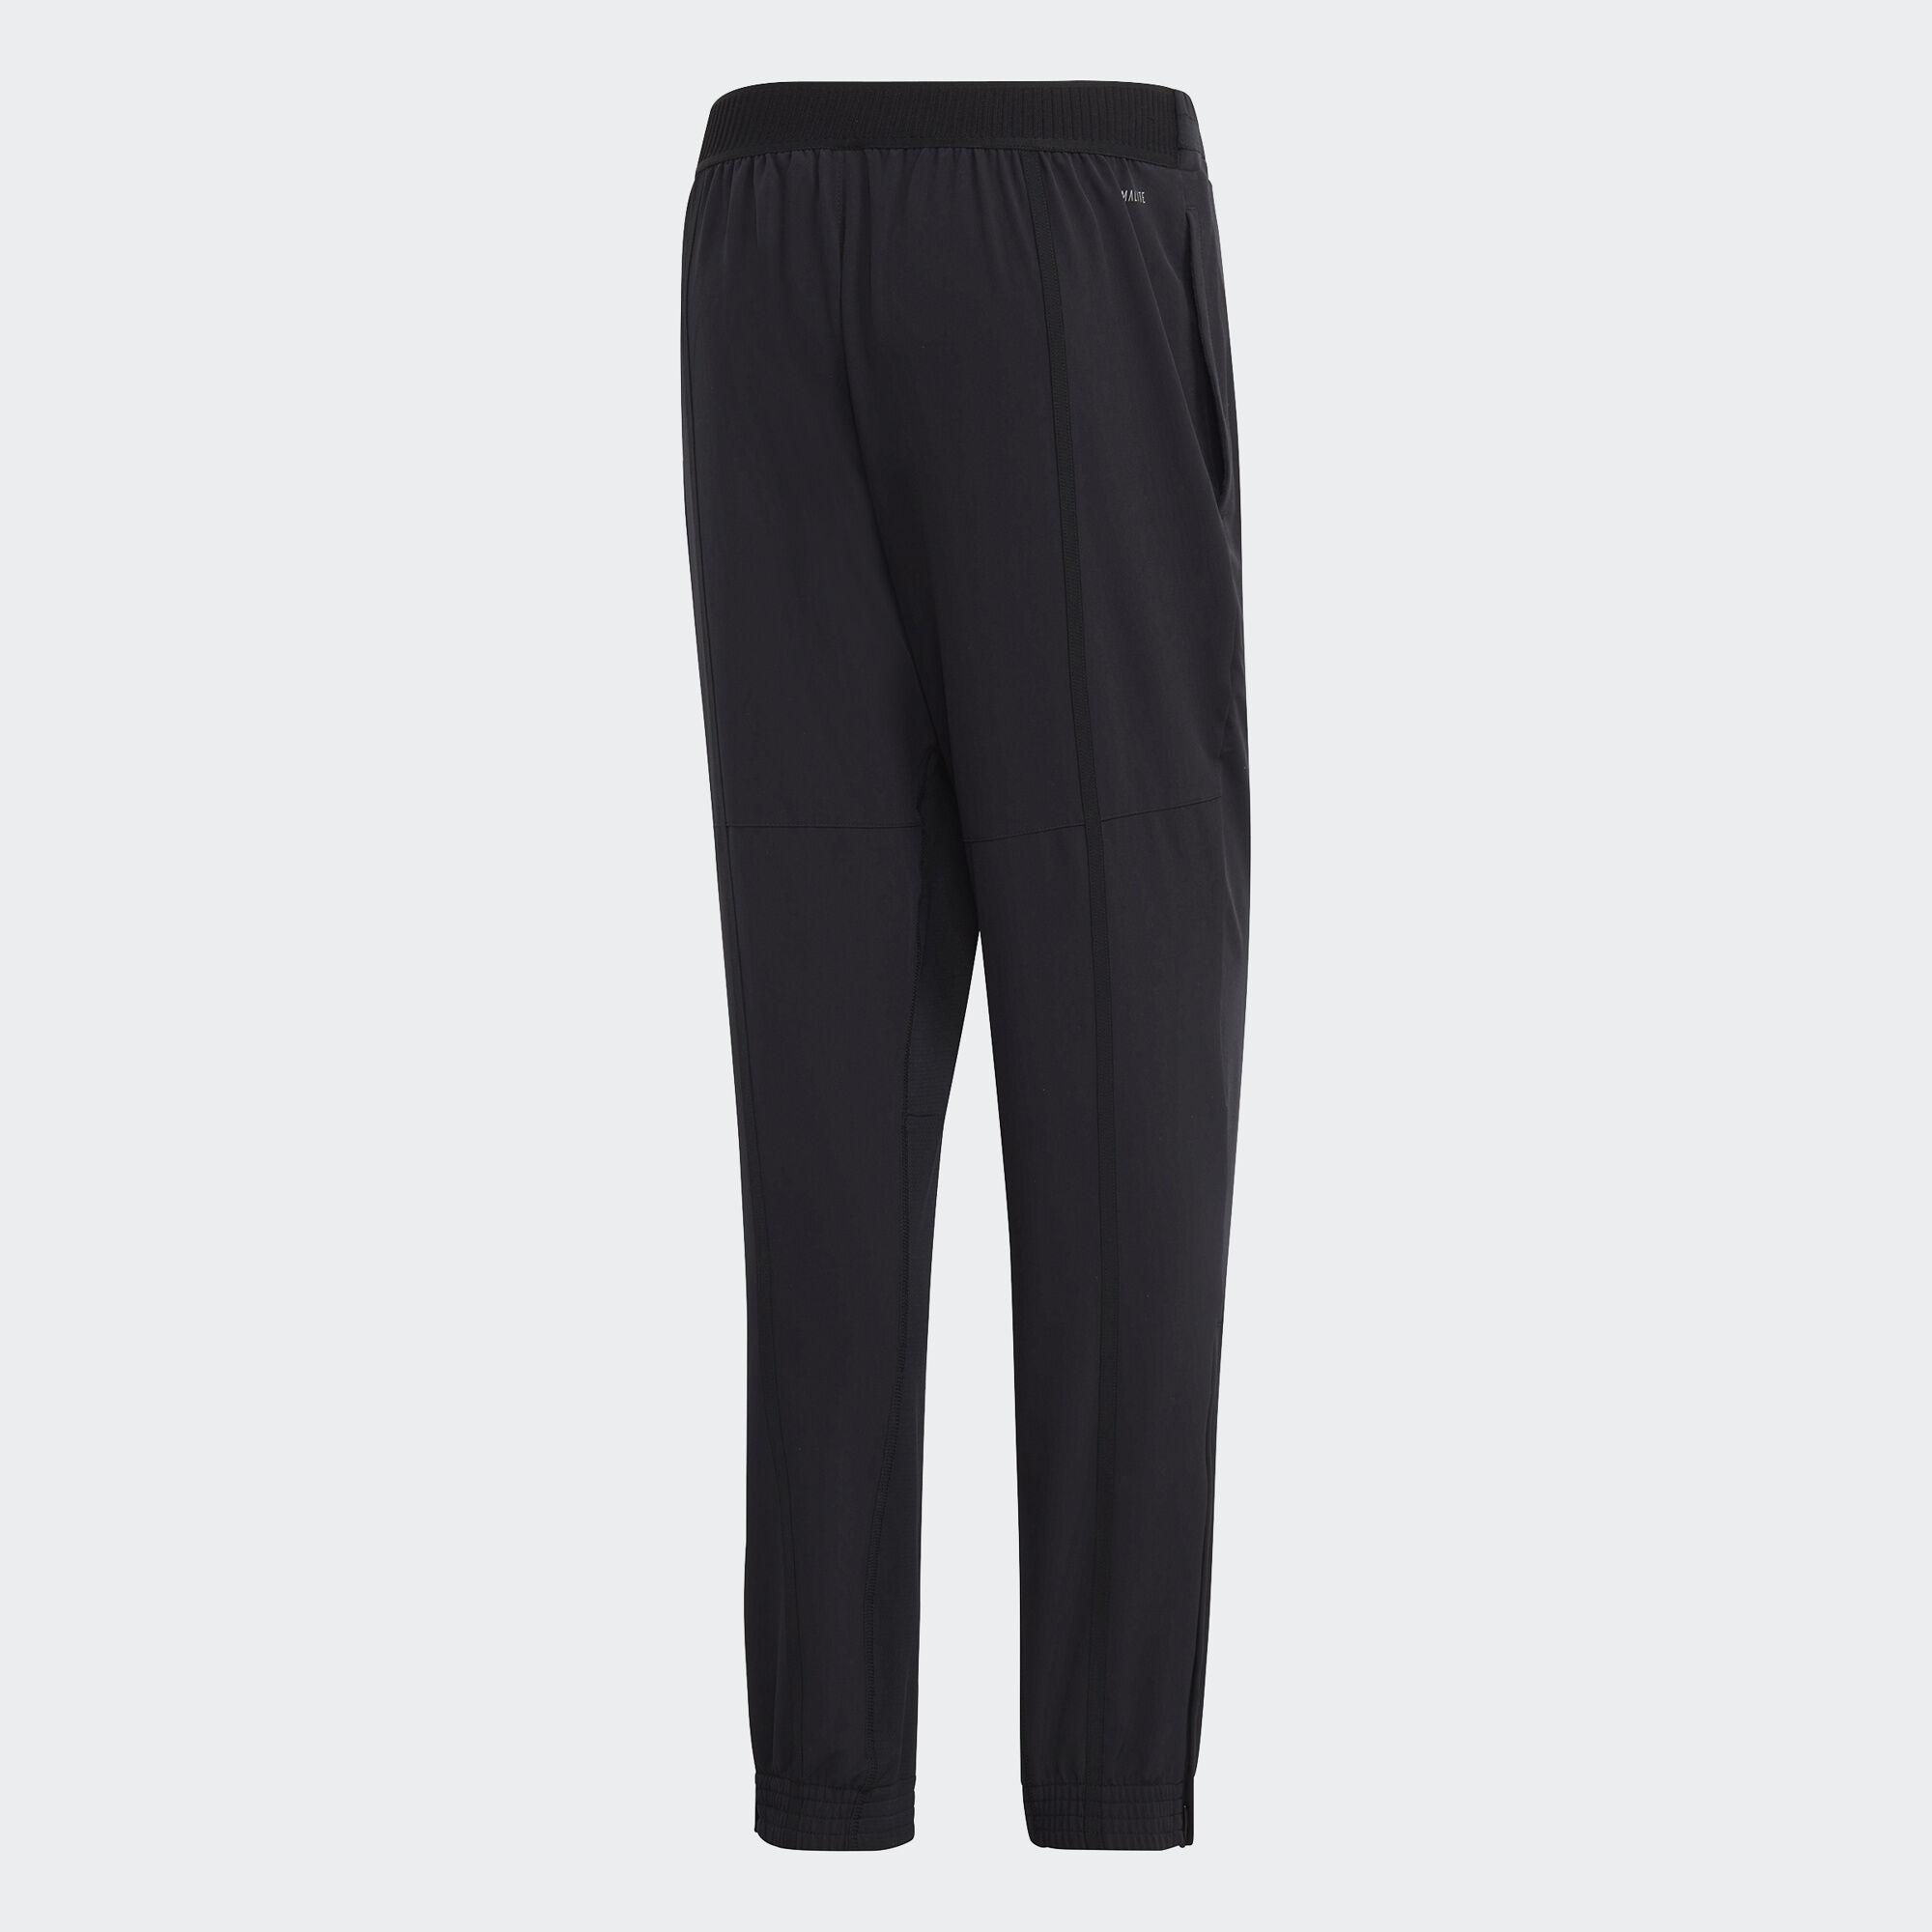 Adidas Mens New York Sweat Pants - Black - Tennisnuts.com